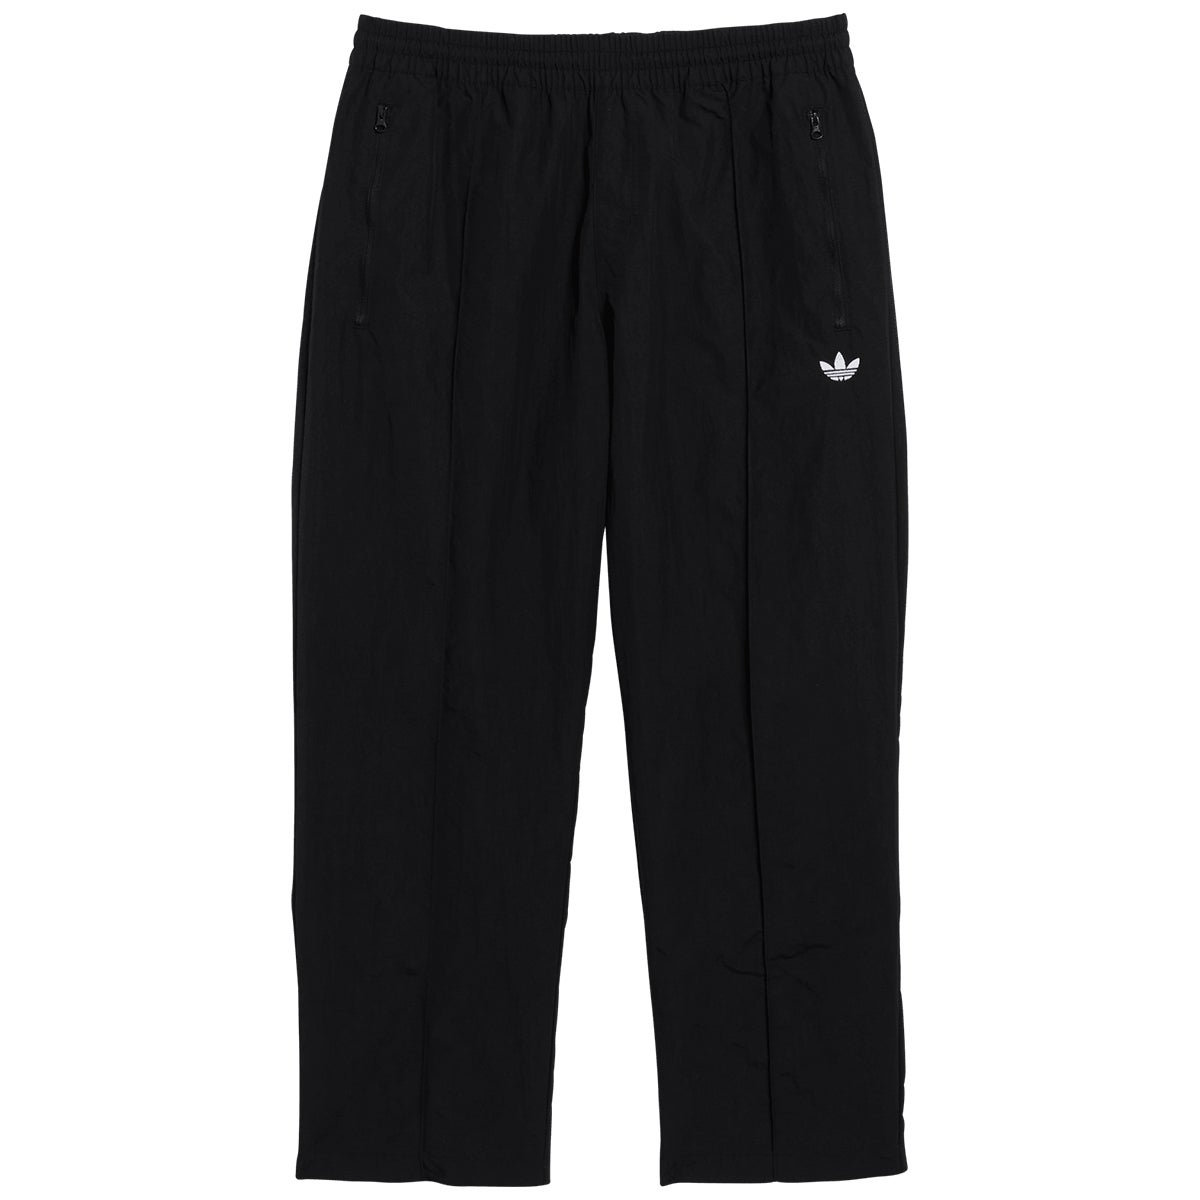 Buy Adidas: Tiro Track Pants - Black (Large) at Mighty Ape NZ